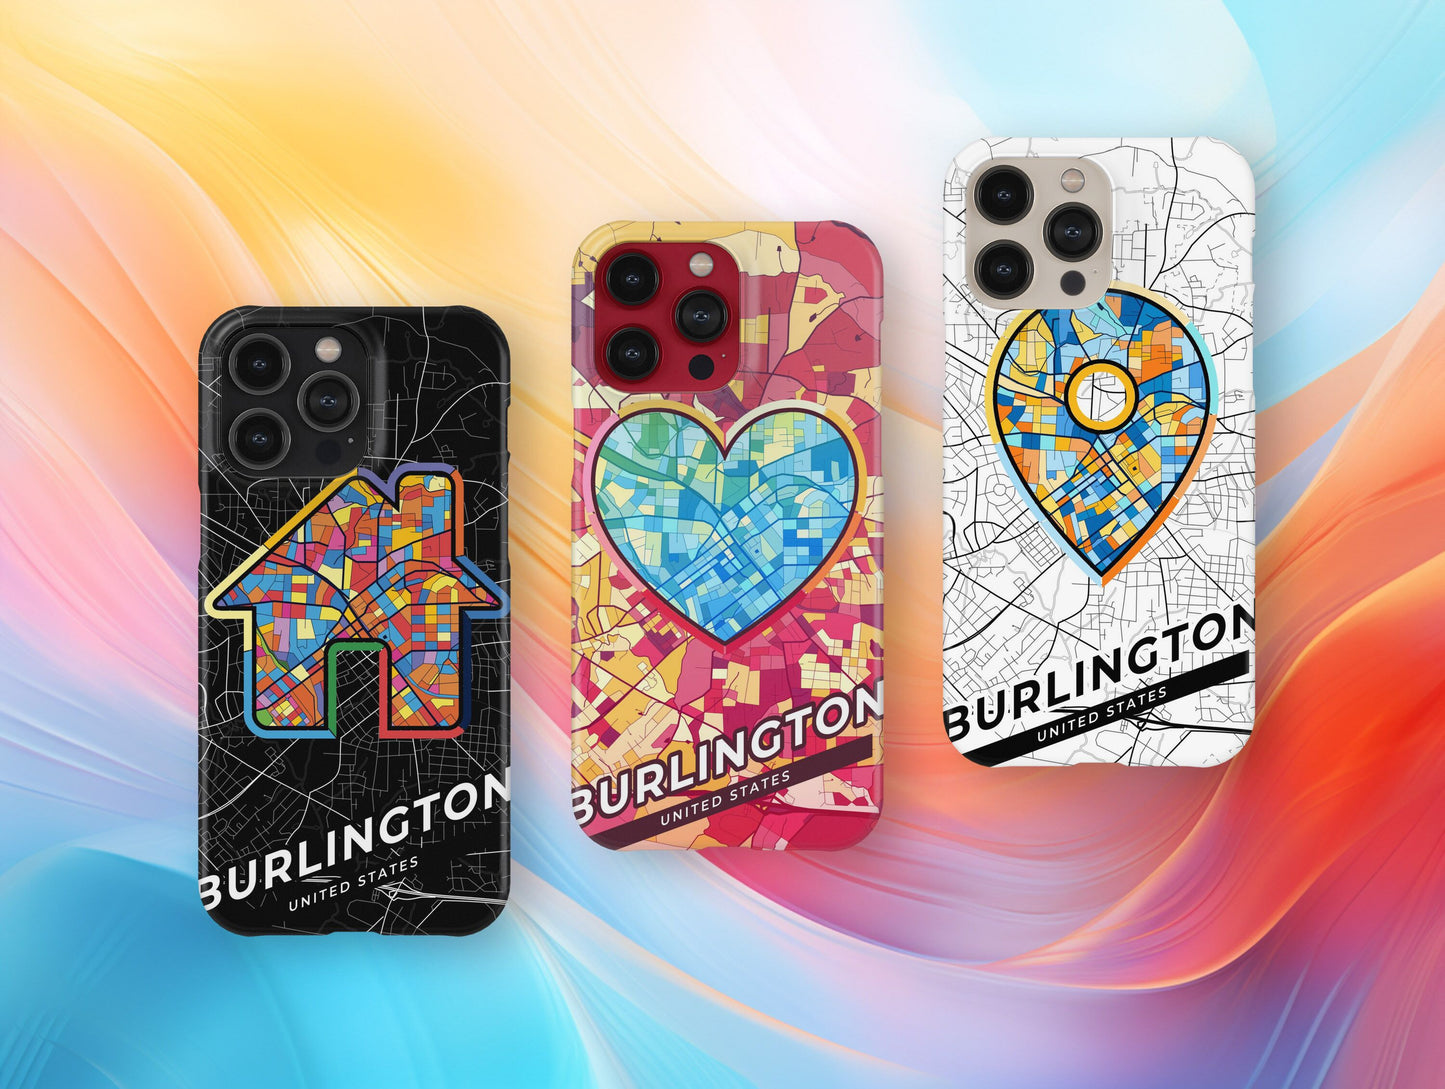 Burlington North Carolina slim phone case with colorful icon. Birthday, wedding or housewarming gift. Couple match cases.